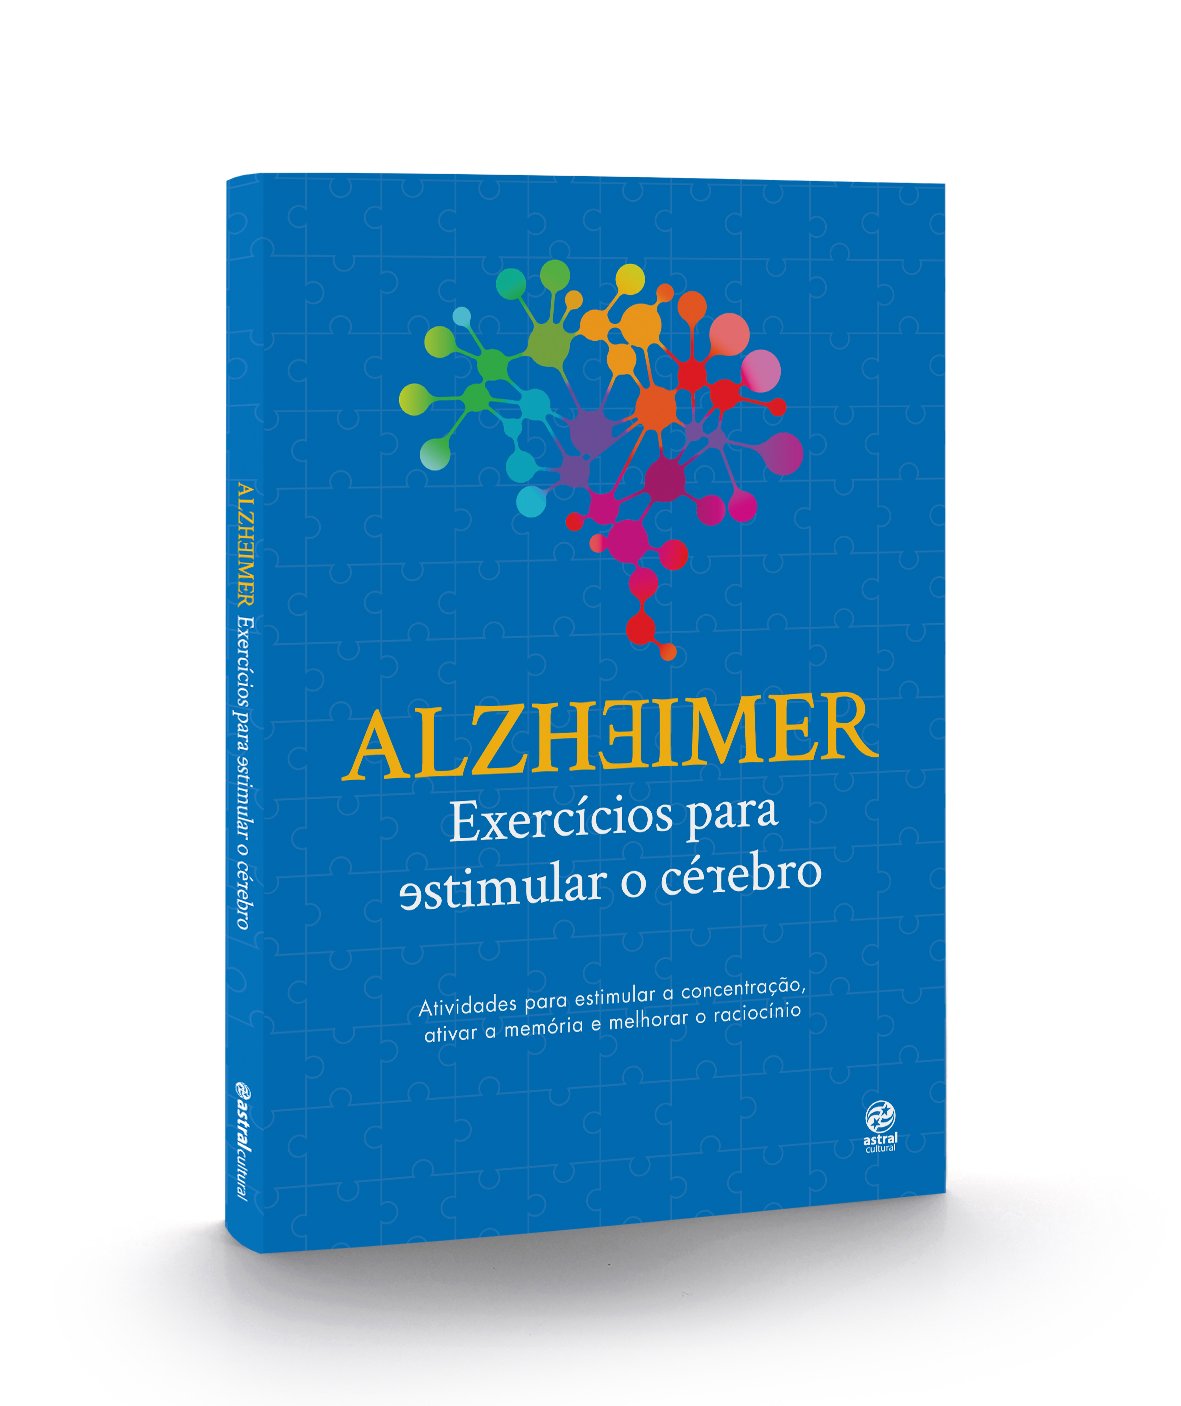 Alzheimer: Exercícios Para Estimular o Cérebro